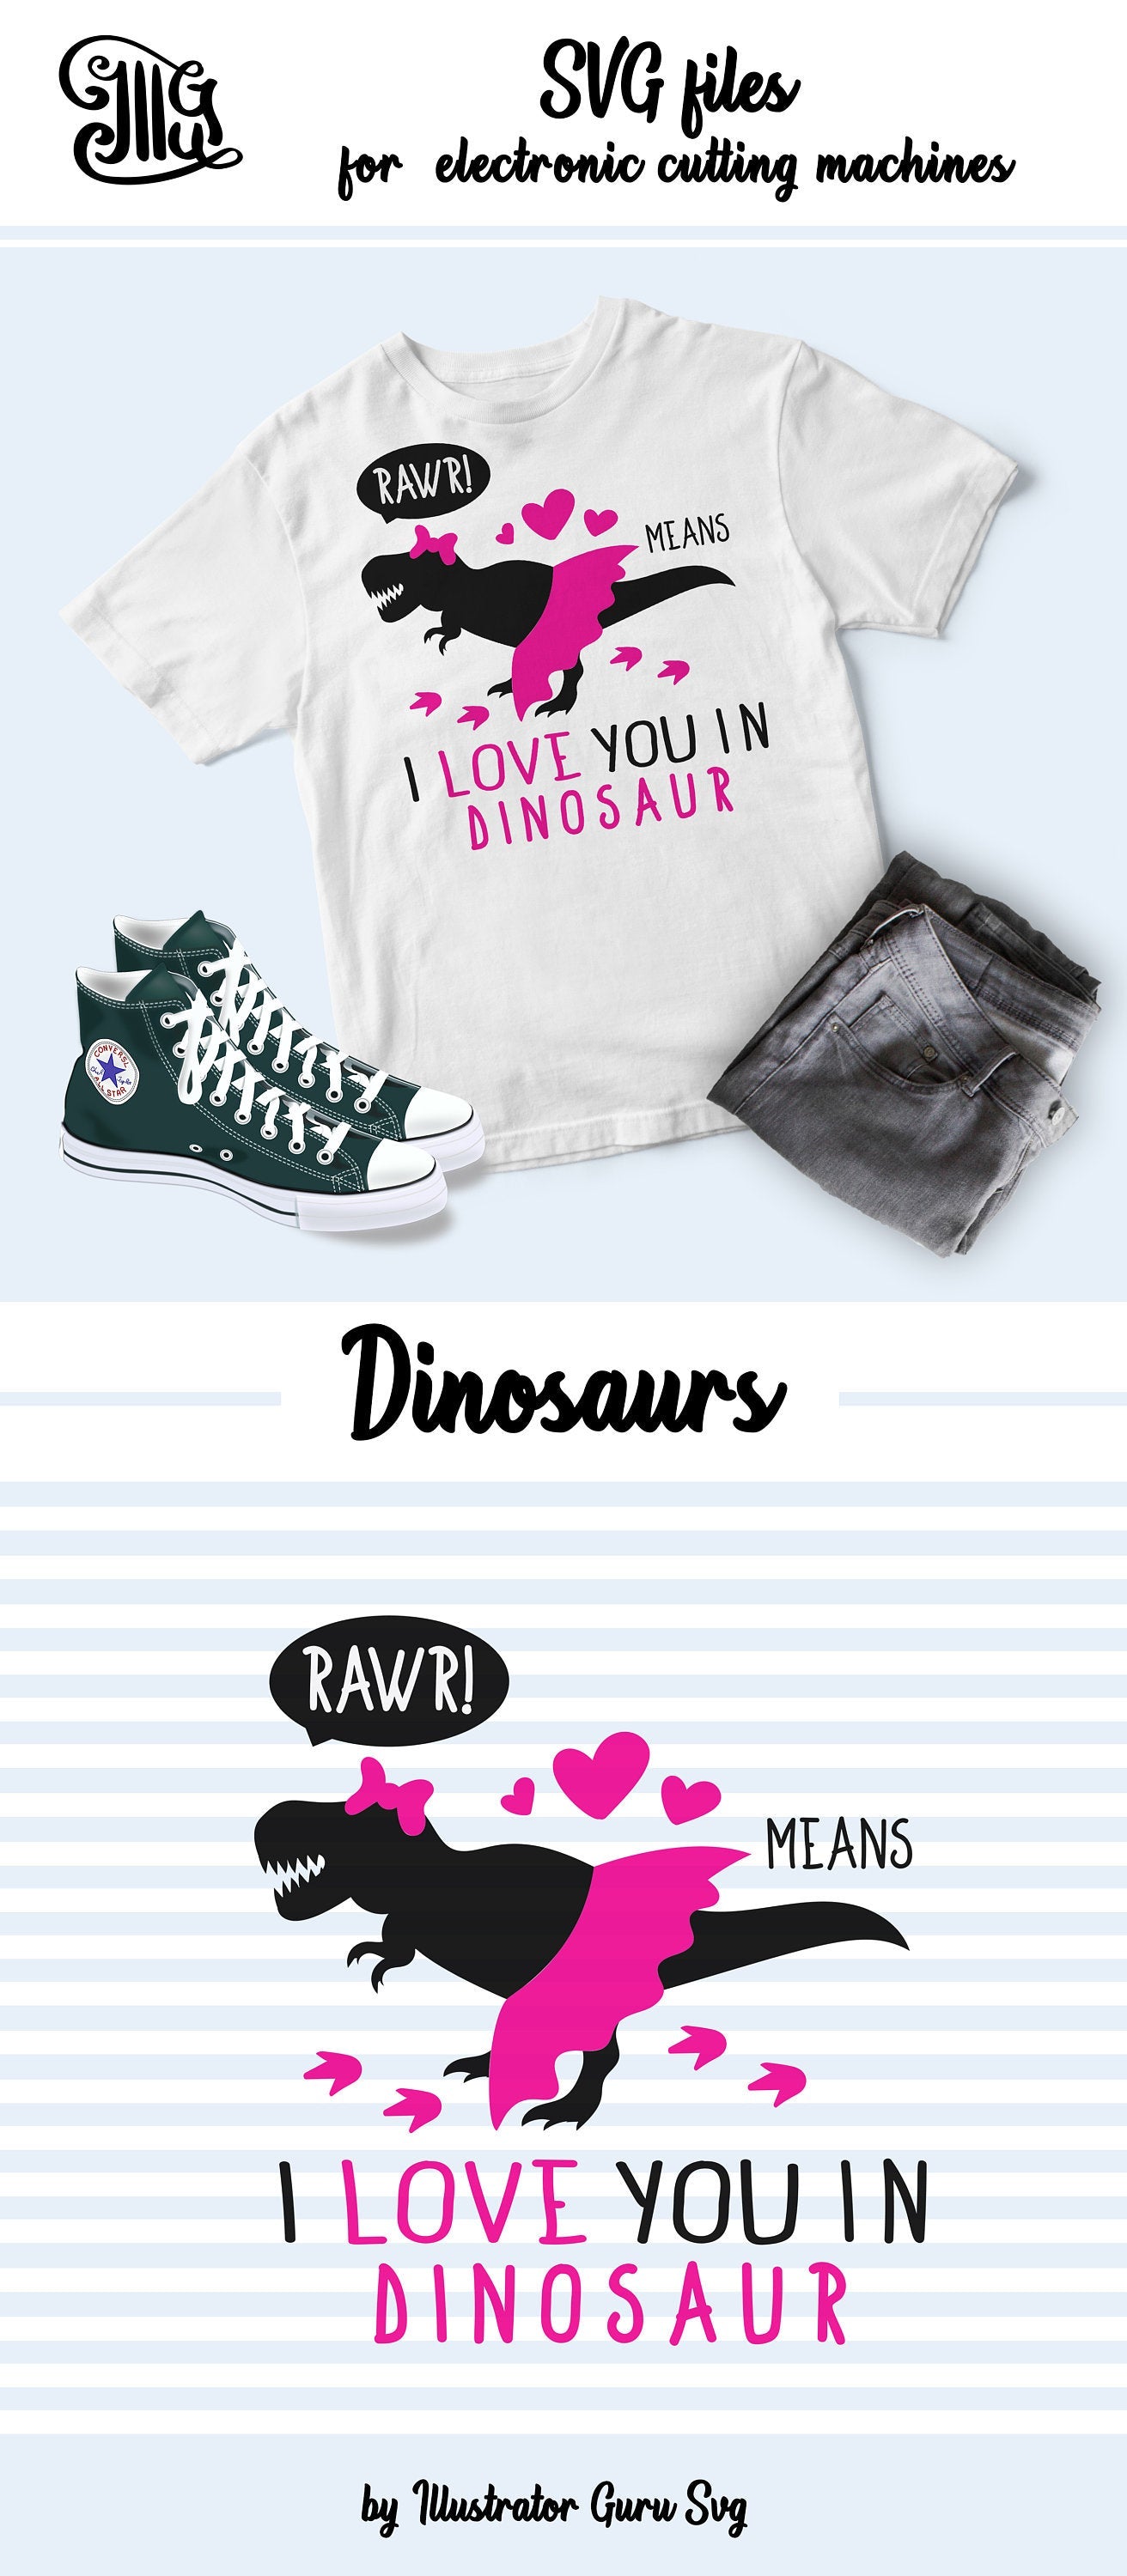 Download Rawr Means I Love You In Dinosaur Svg Girl Dinosaur Svg Dinosaur Svg Illustrator Guru